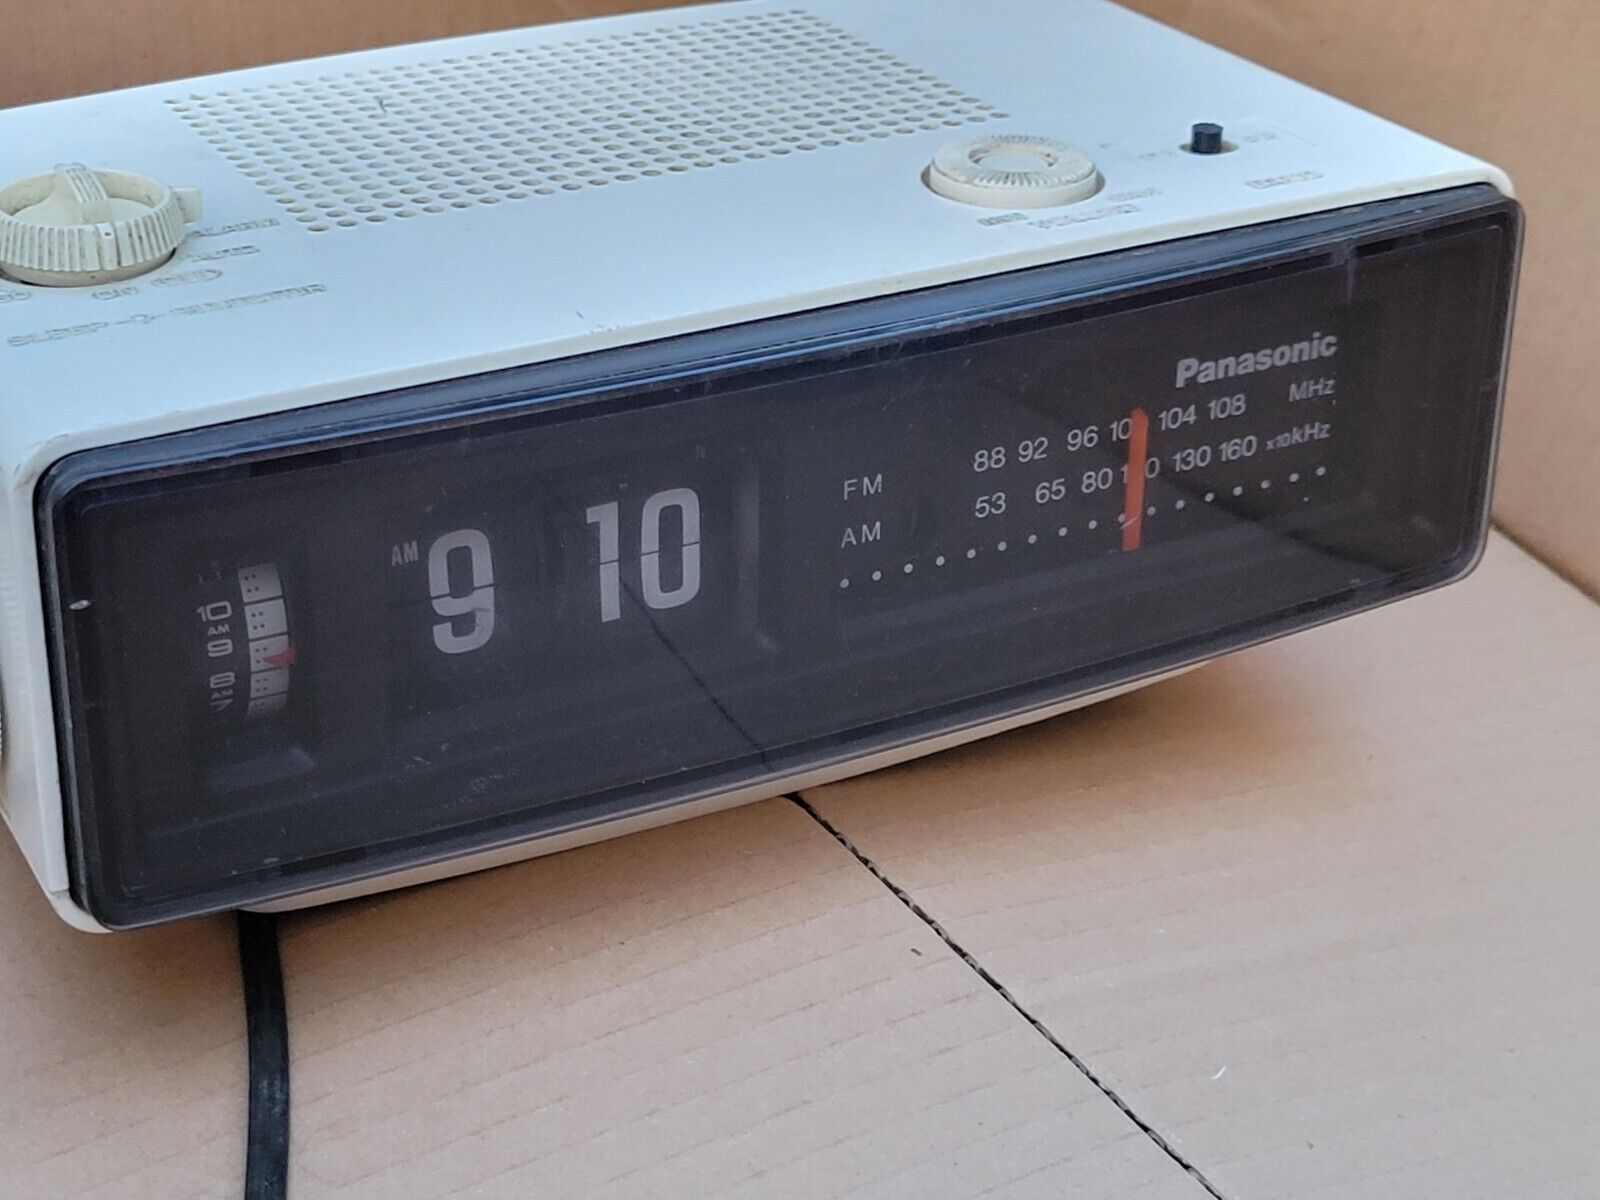 Panasonic RC-6025 Flip Clock Alarm Radio Groundhog Day *READ*